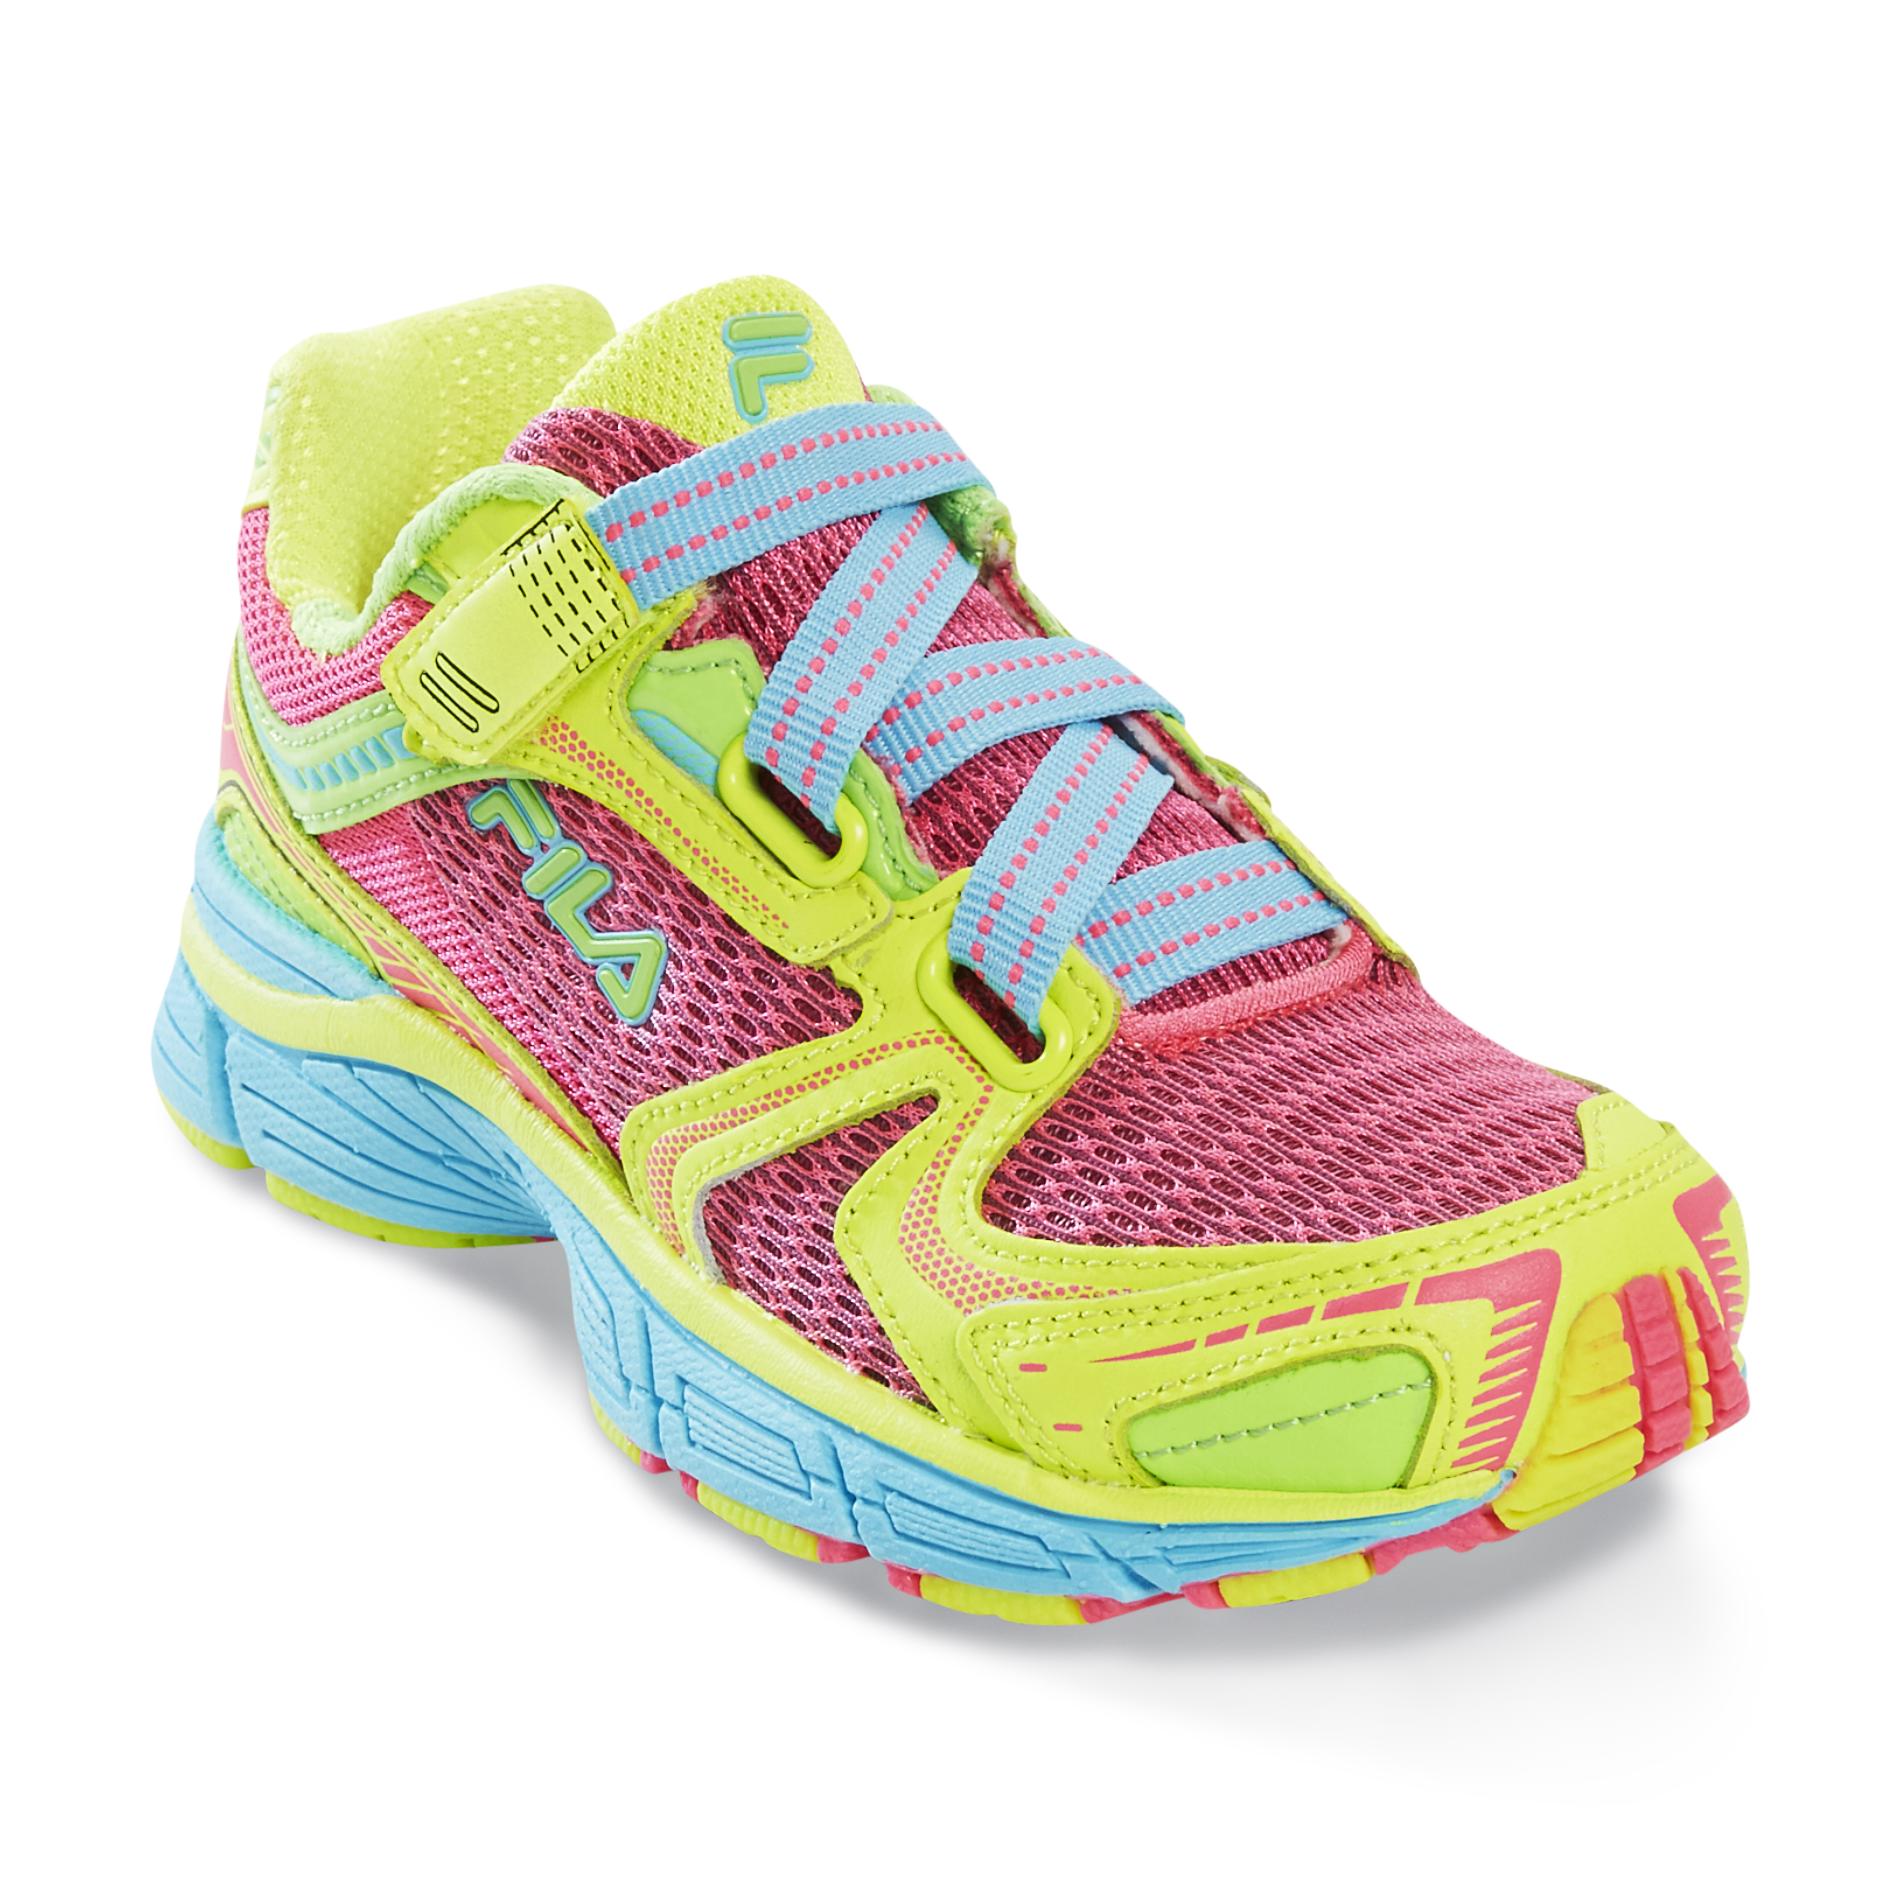 Fila Girl's Approach EZ Athletic Shoe - Pink Multi